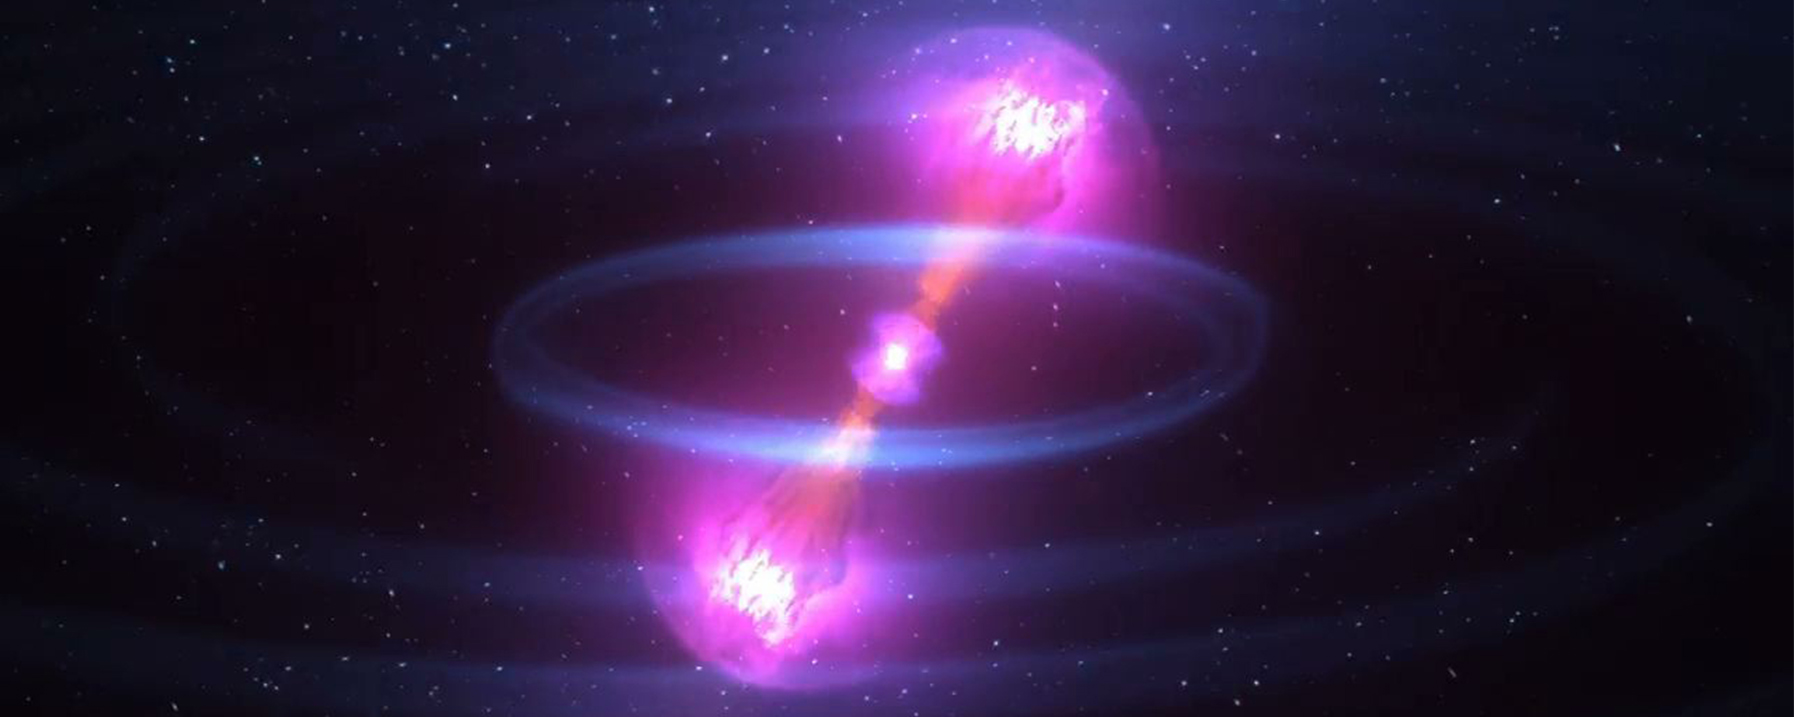 still from animation showing neutron stars